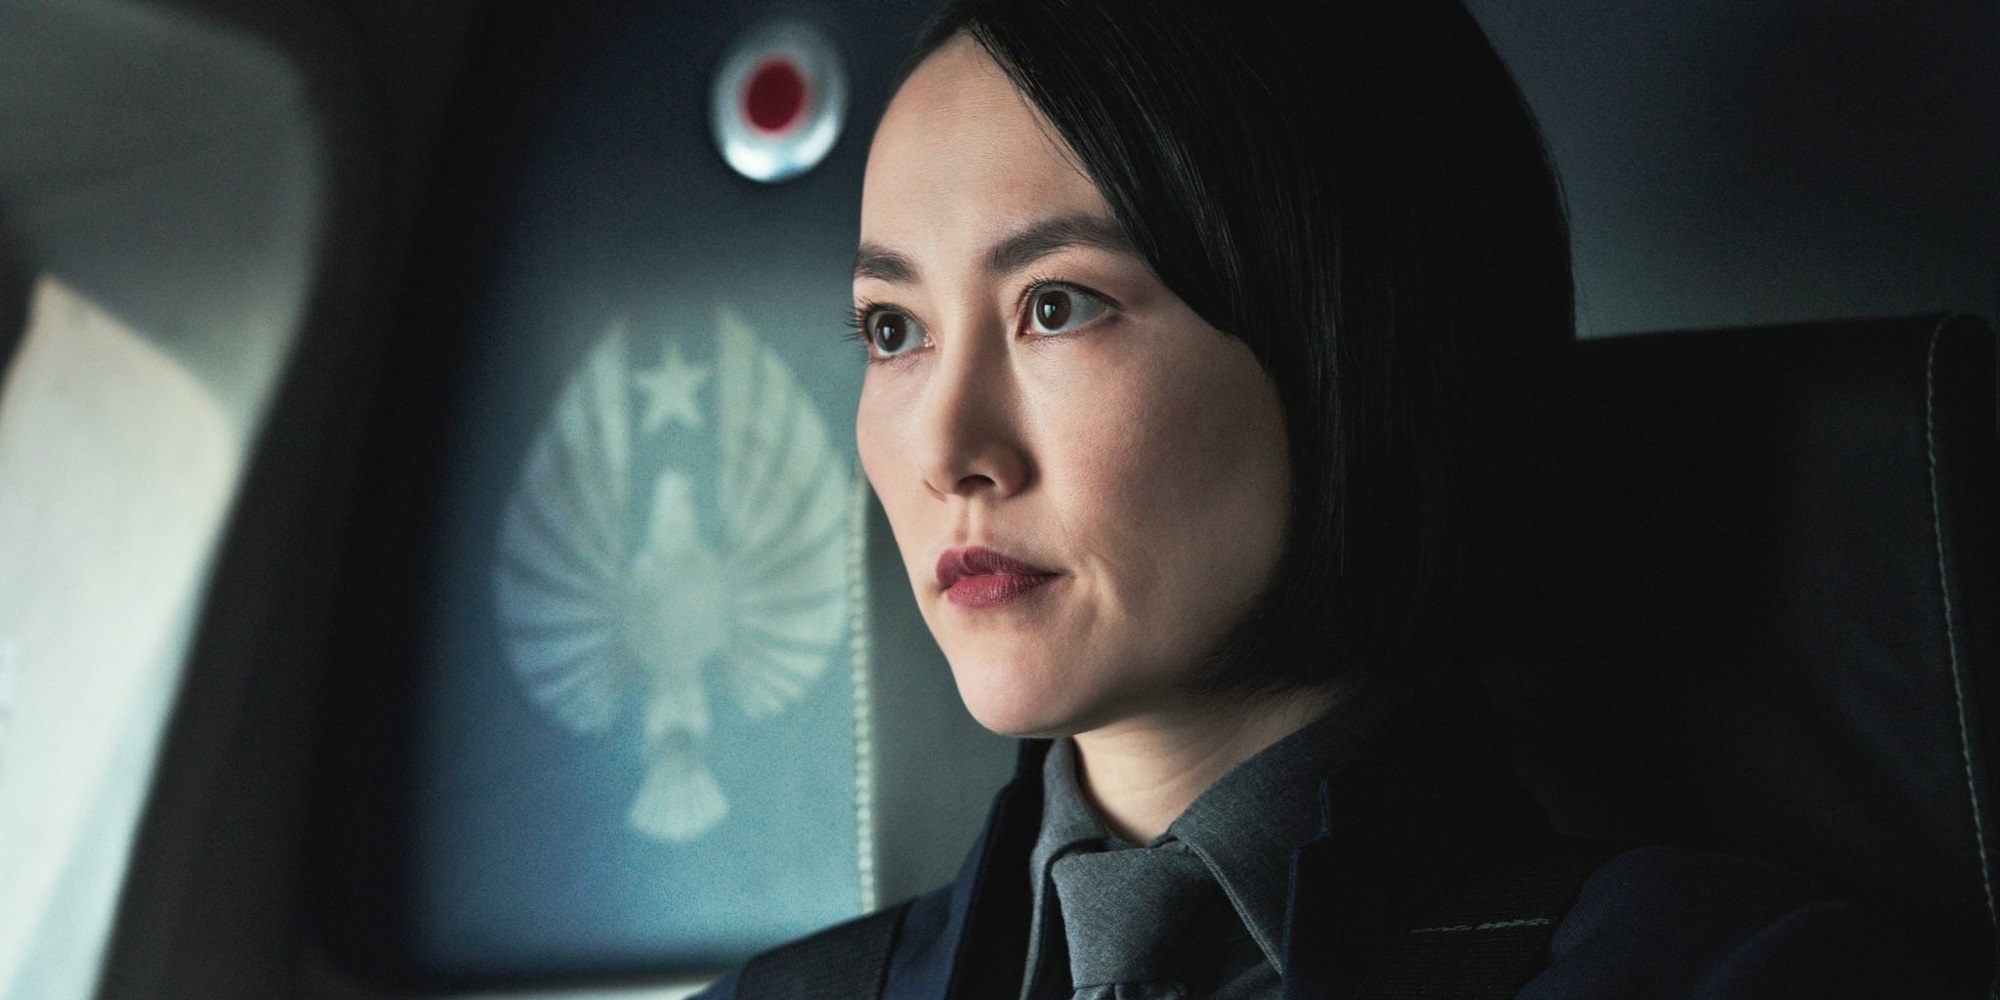 Rinko Kikuchi as Mako Mori in "Pacific Rim: Uprising"